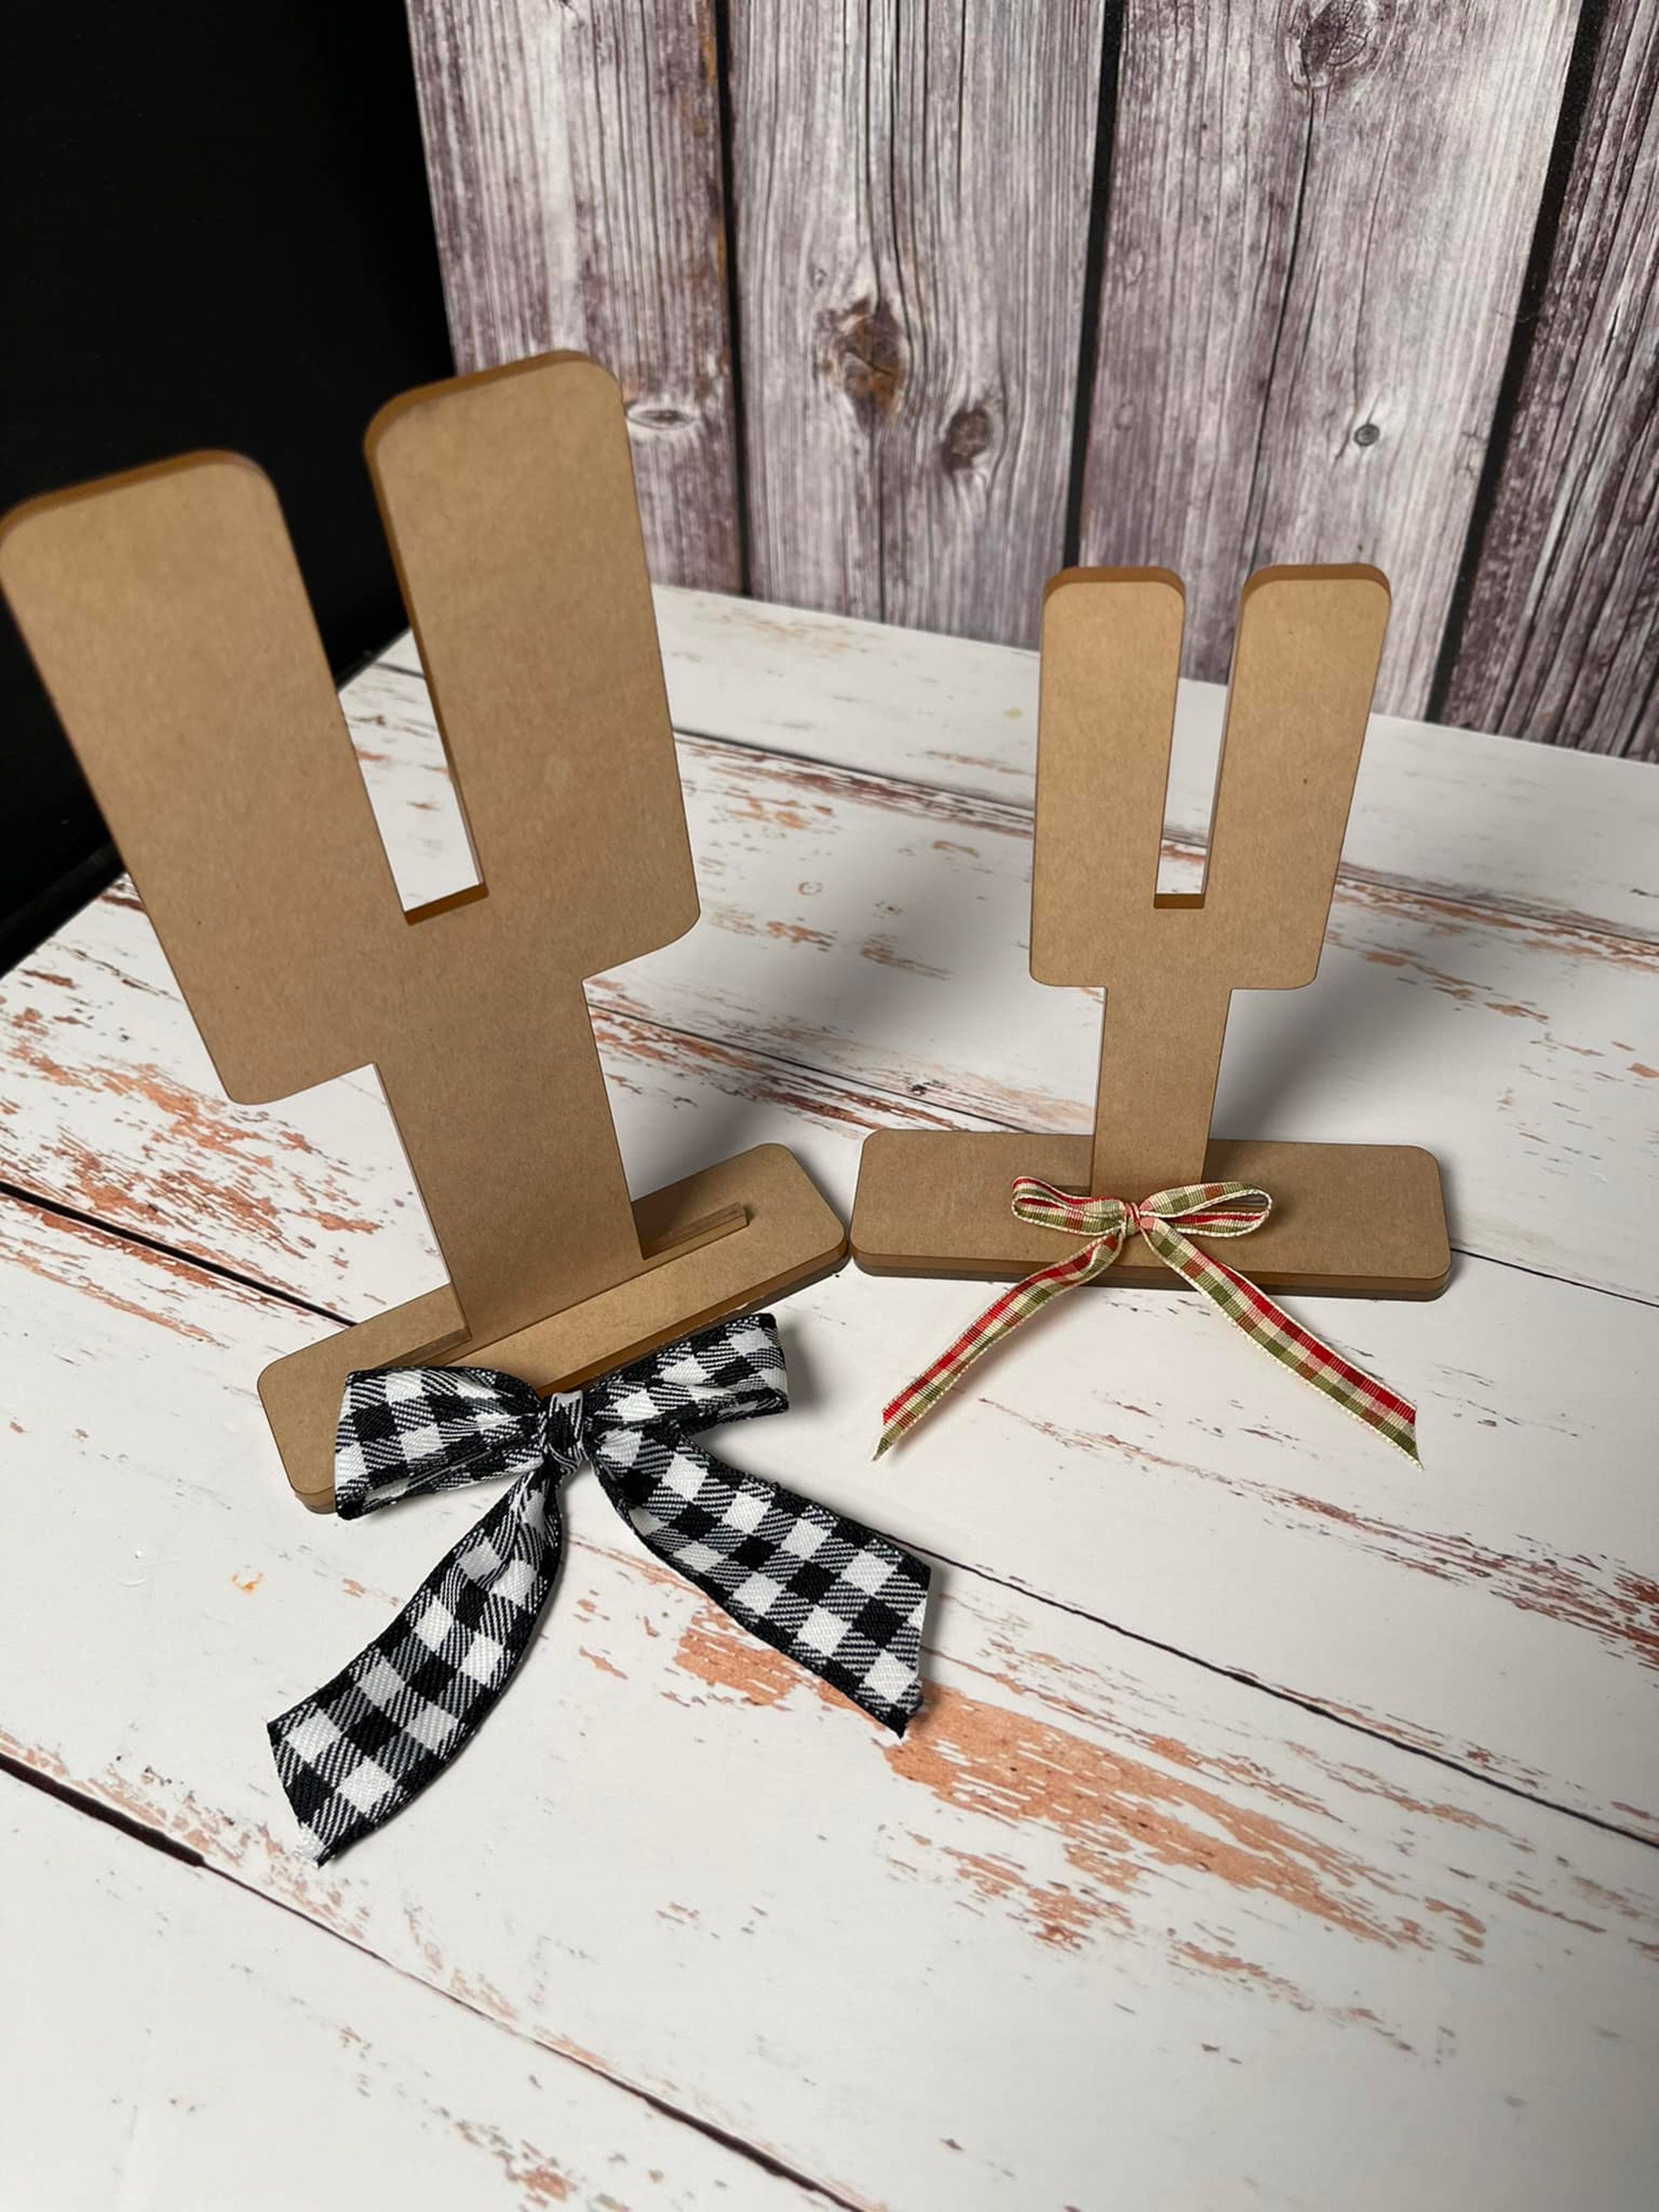 Bow Maker, Wooden Bow Maker for Ribbon Decorative Gift Making Tool Kit